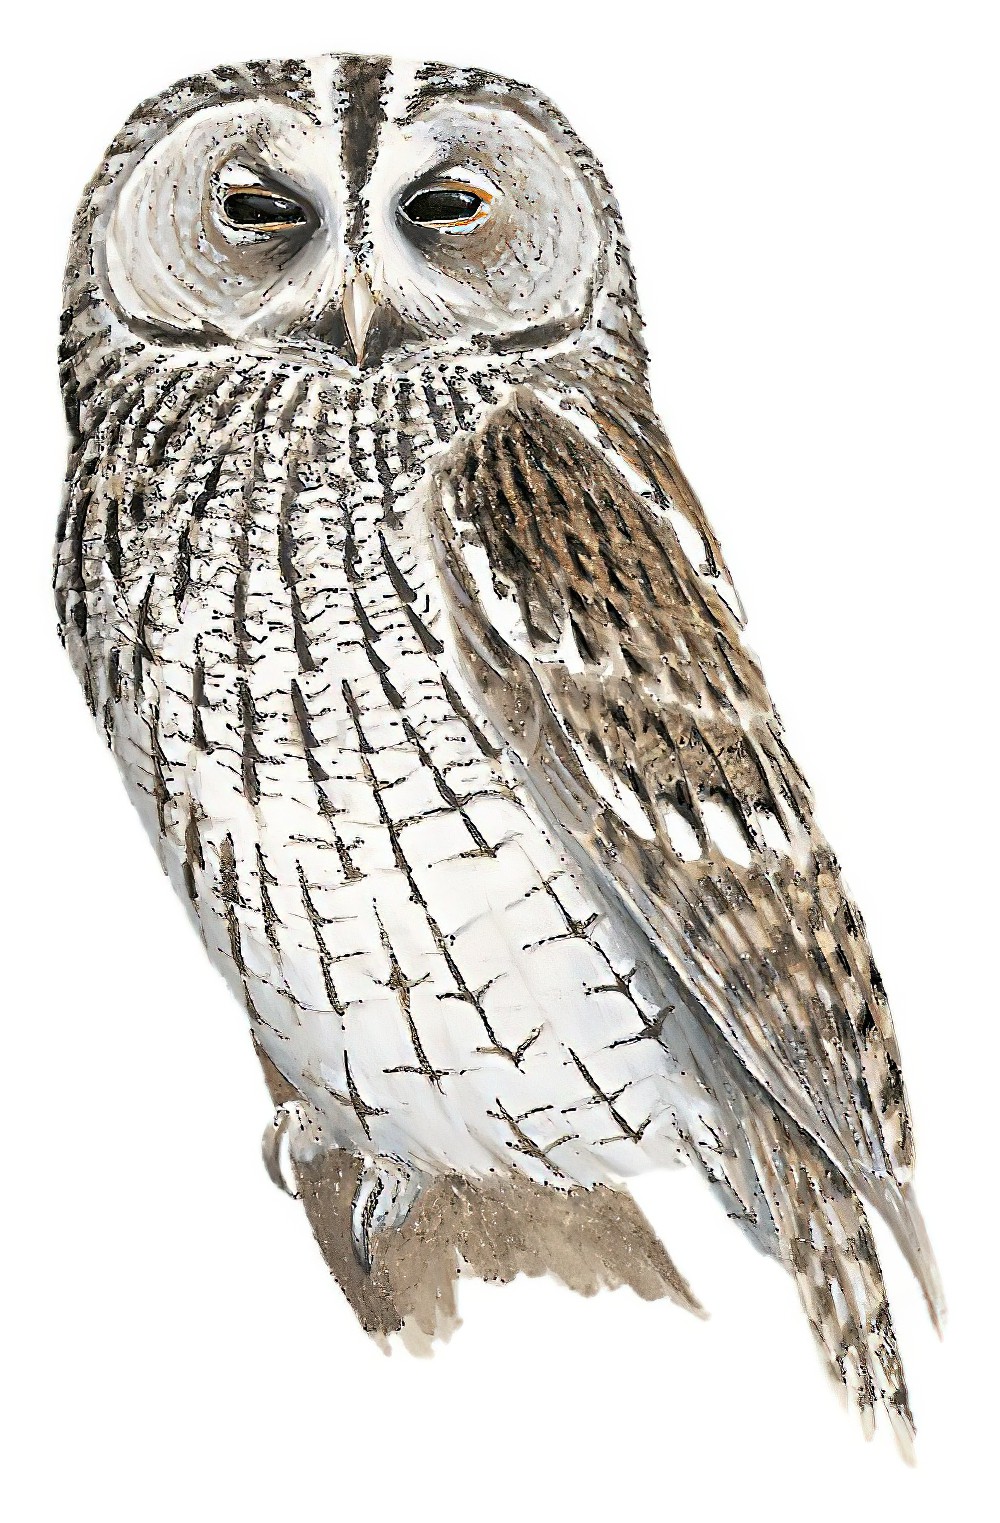 Tawny Owl / Strix aluco